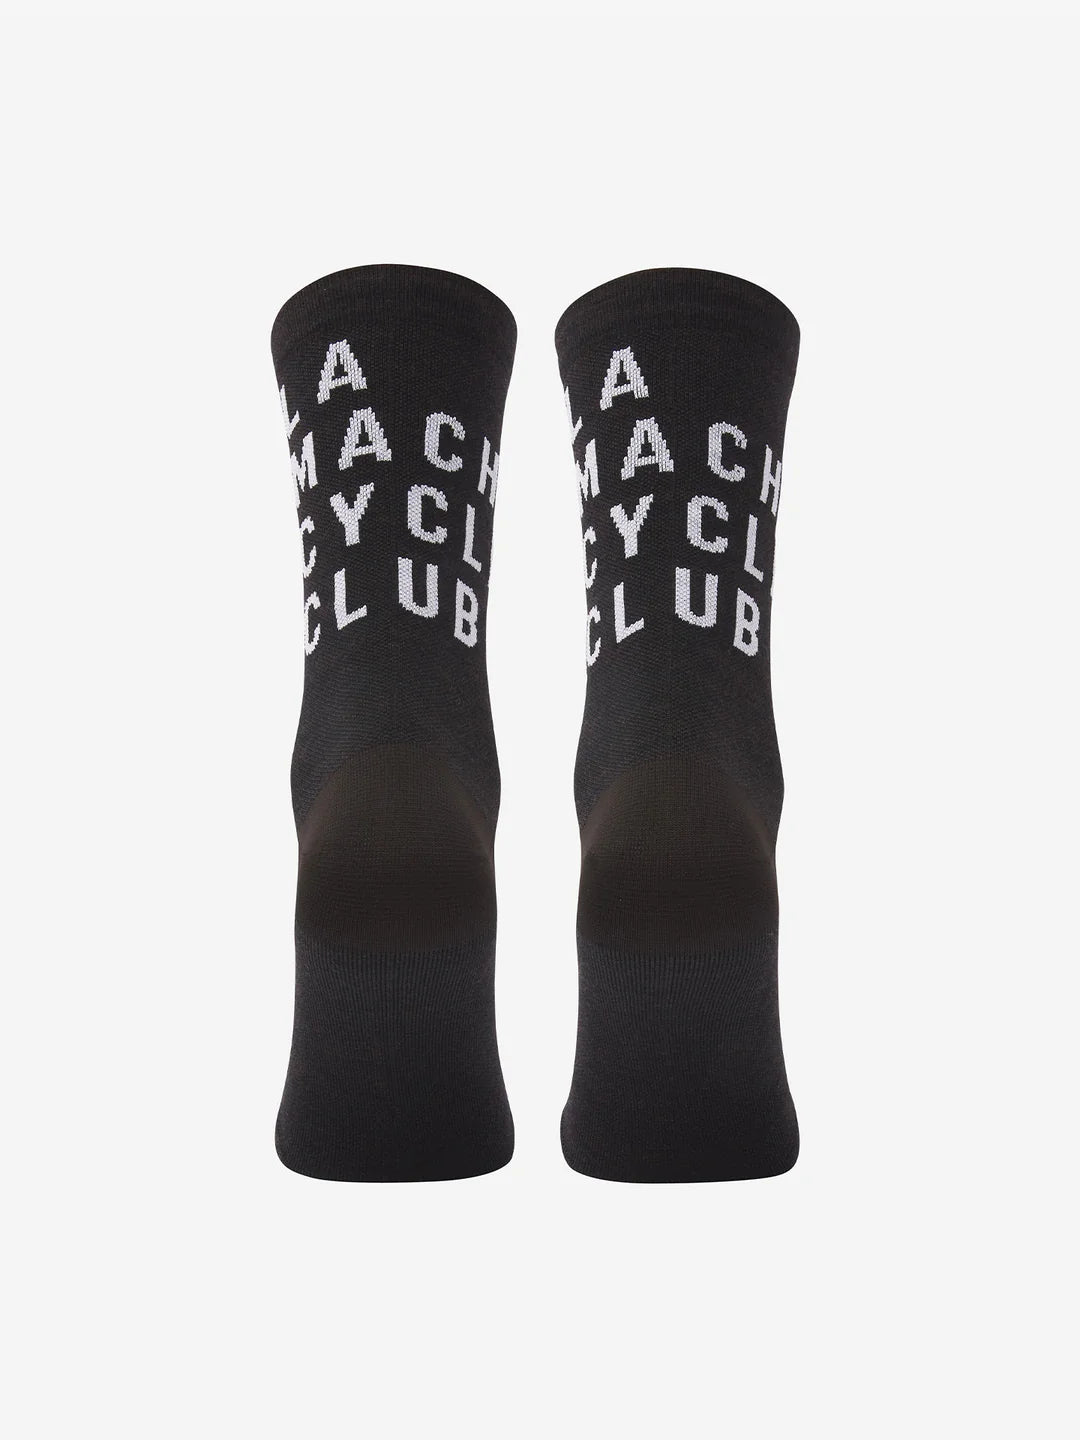 LMCC - Cycling Socks - Bundle